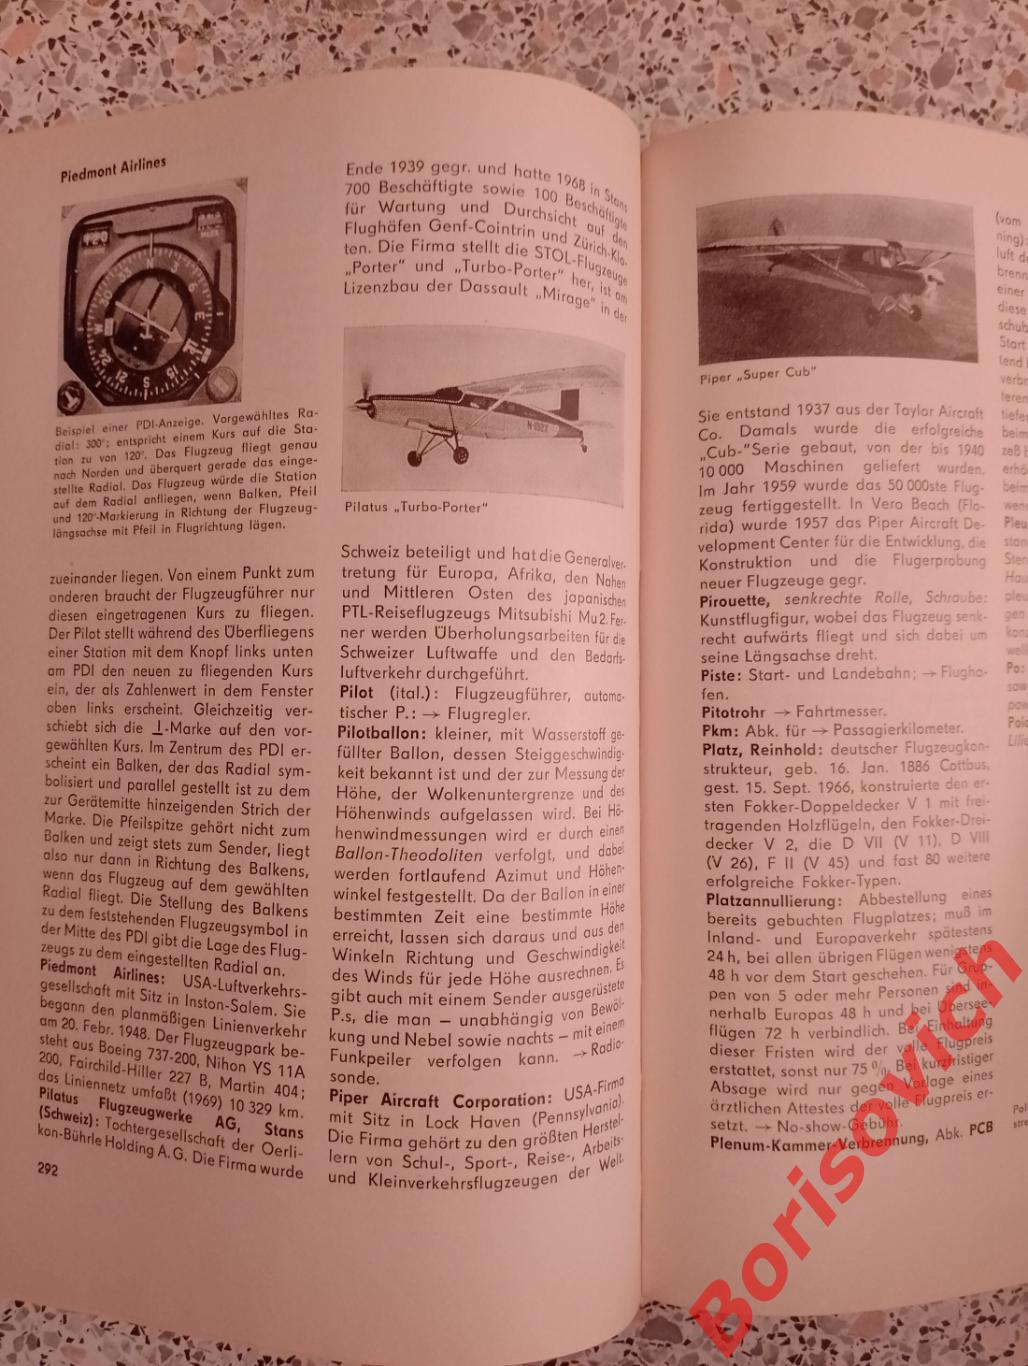 Heinz A. F. Schmidt Lexikon Luftfahrt ЭНЦИКЛОПЕДИЯ АВИАЦИИ 1971 Берлин 418 стр 3